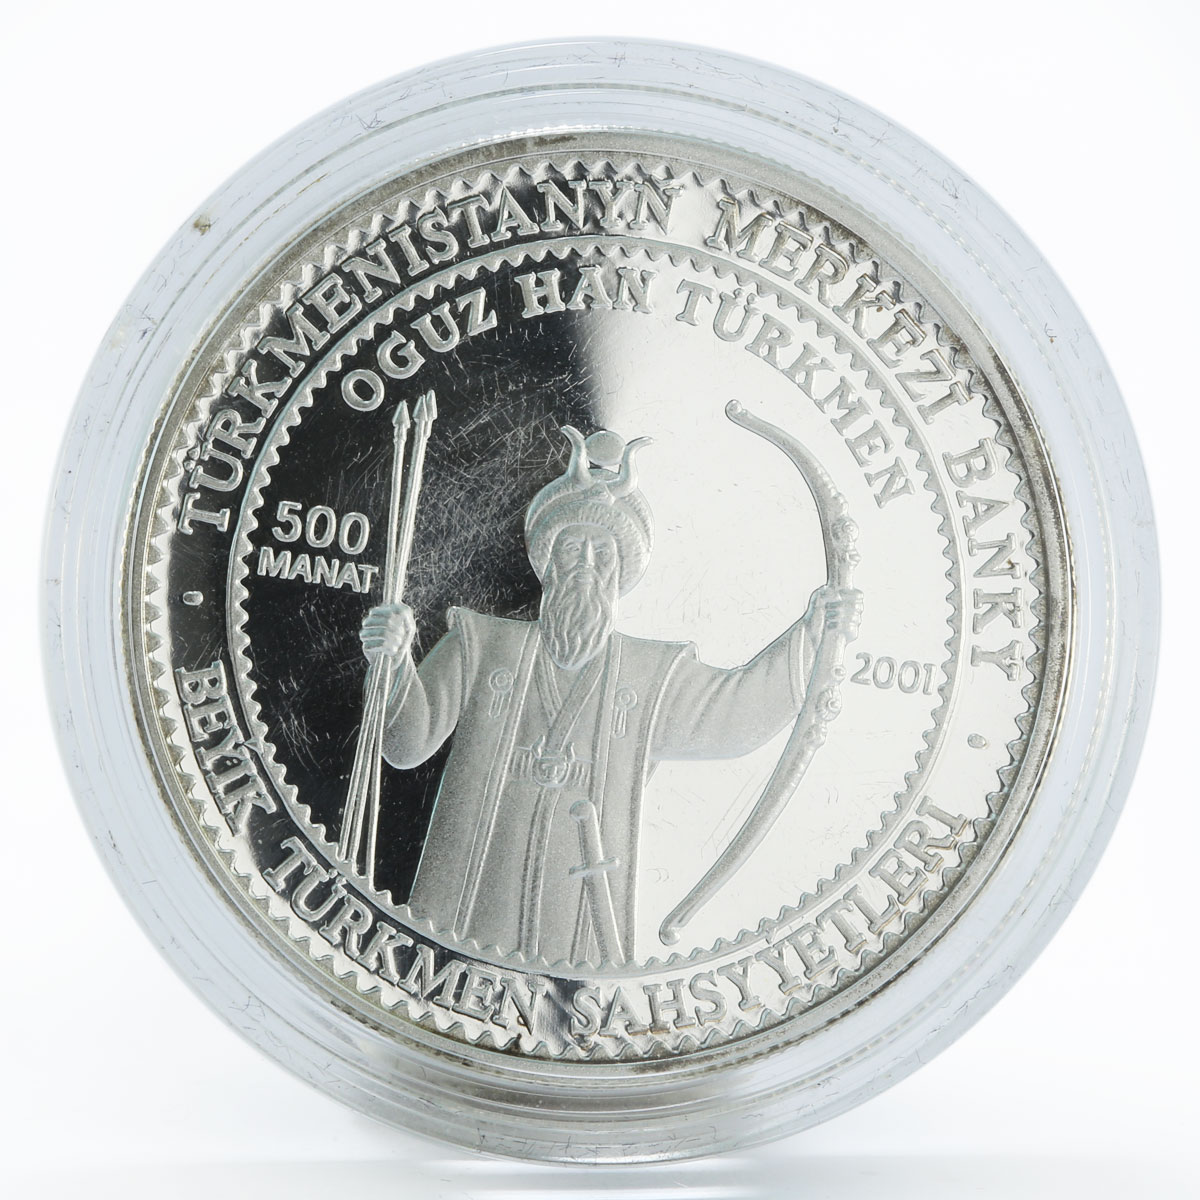 Turkmenistan 500 manat Oguz Khan Turkmen proof silver coin 2001